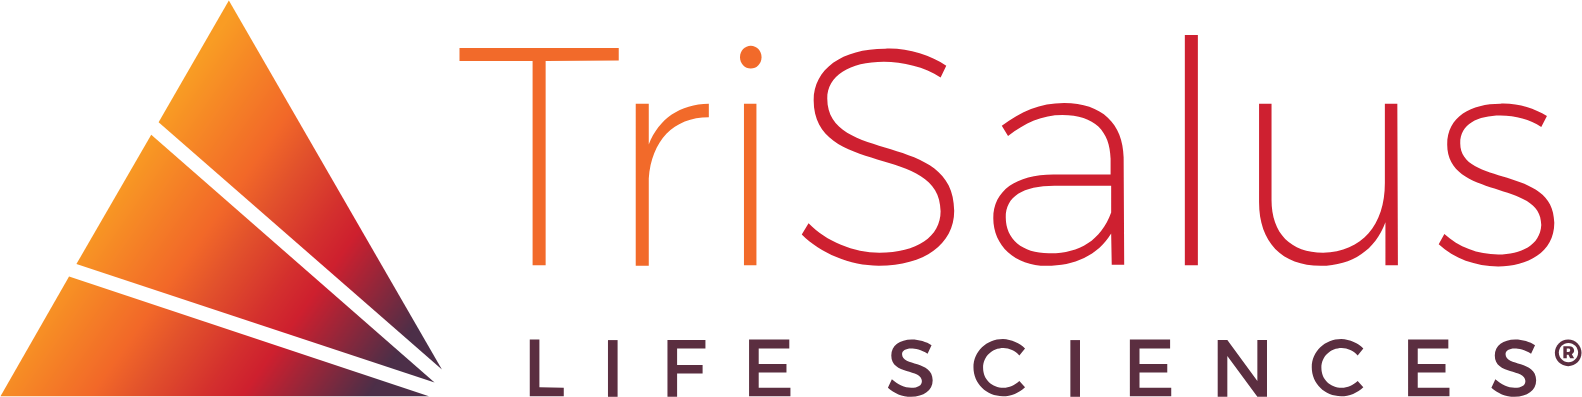 TriSalus Life Sciences logo large (transparent PNG)